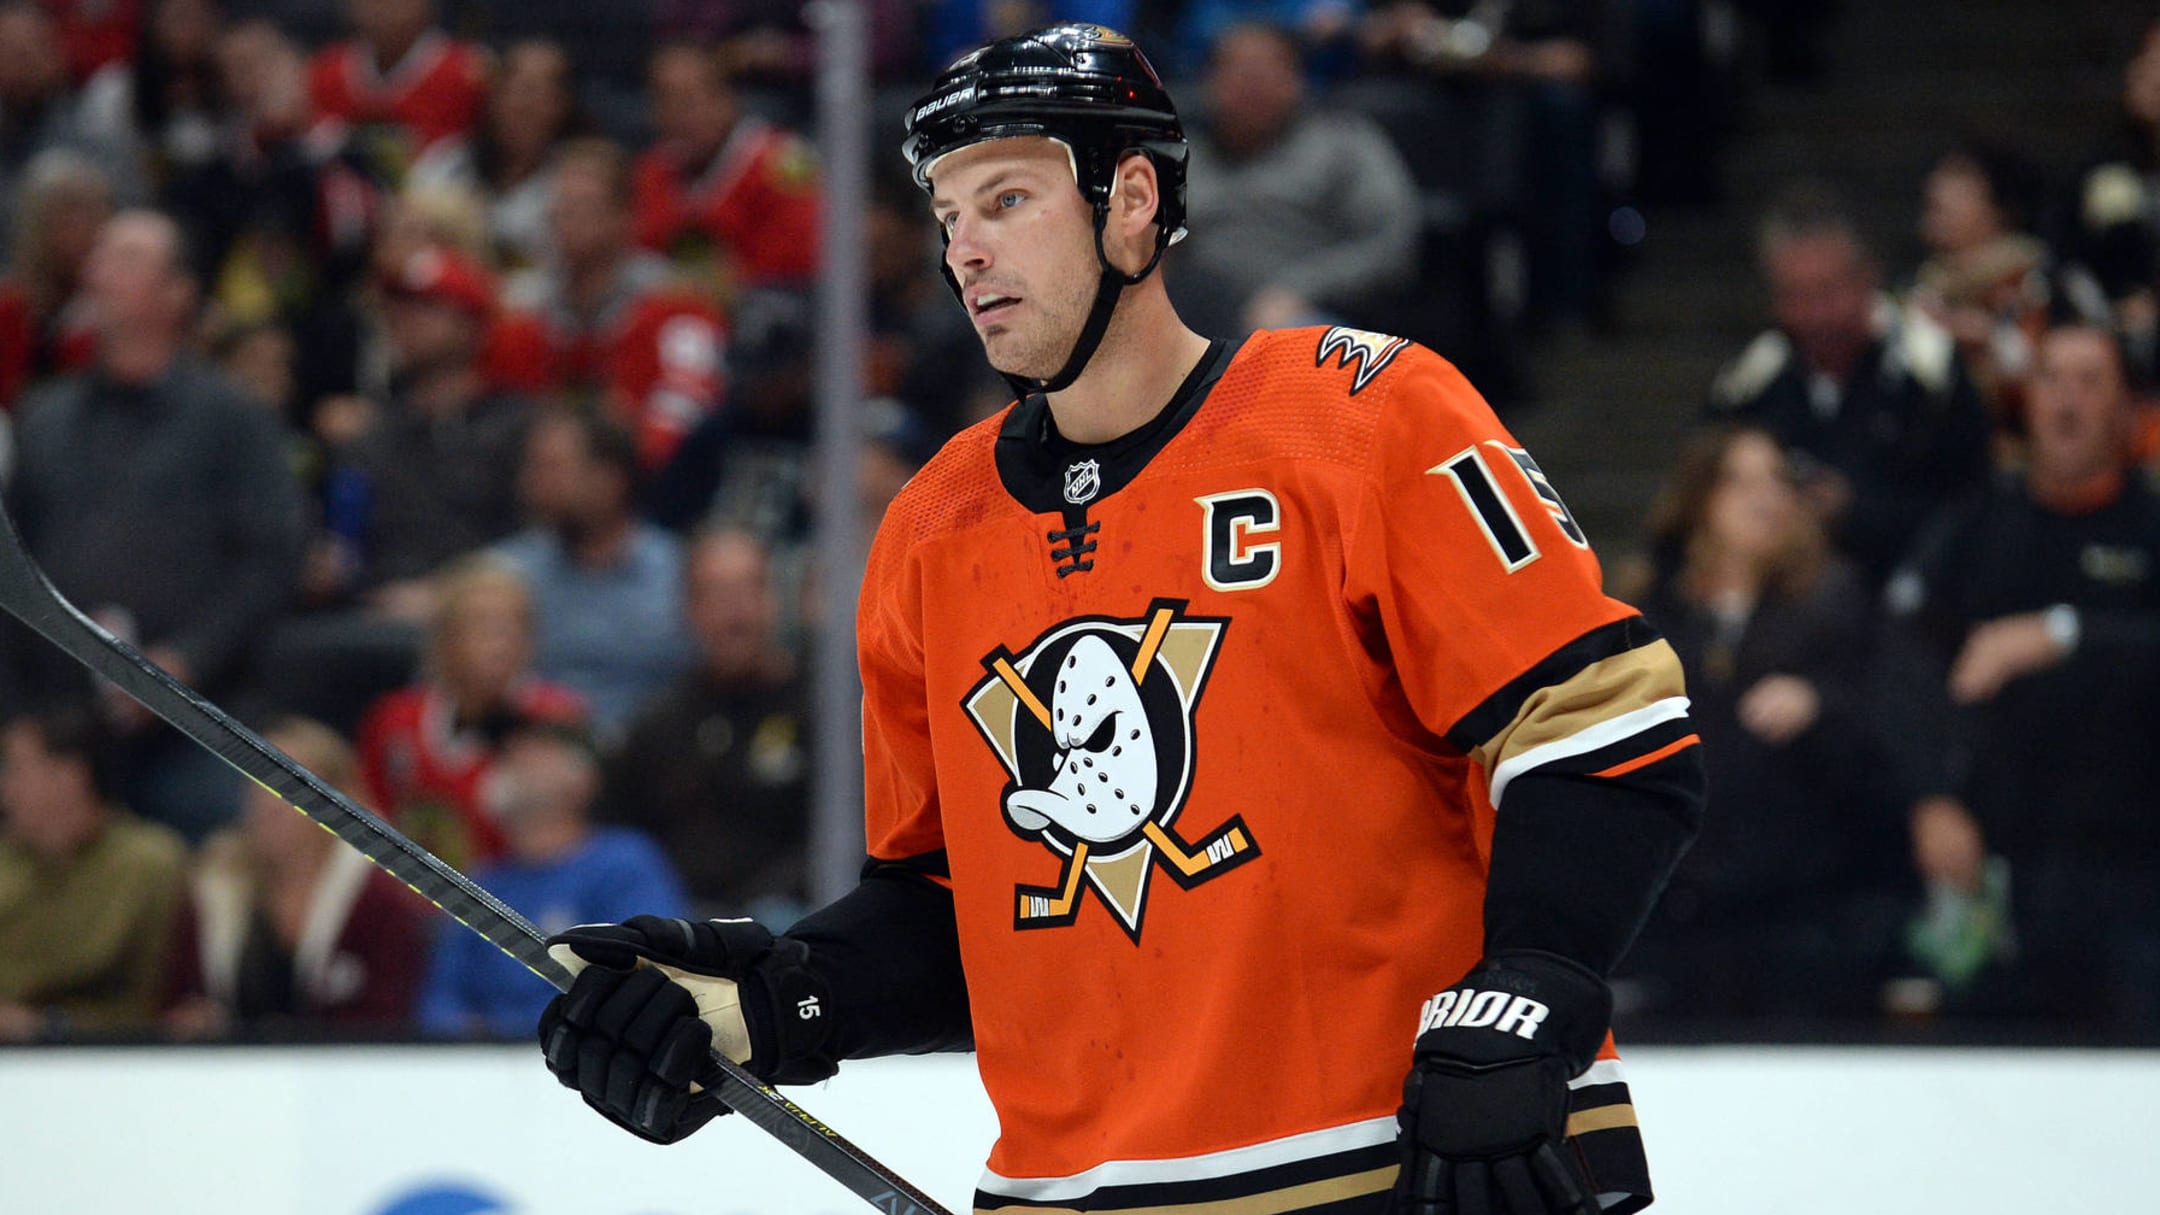 Penguins, Flyers 'reverse retro' jerseys leaked?